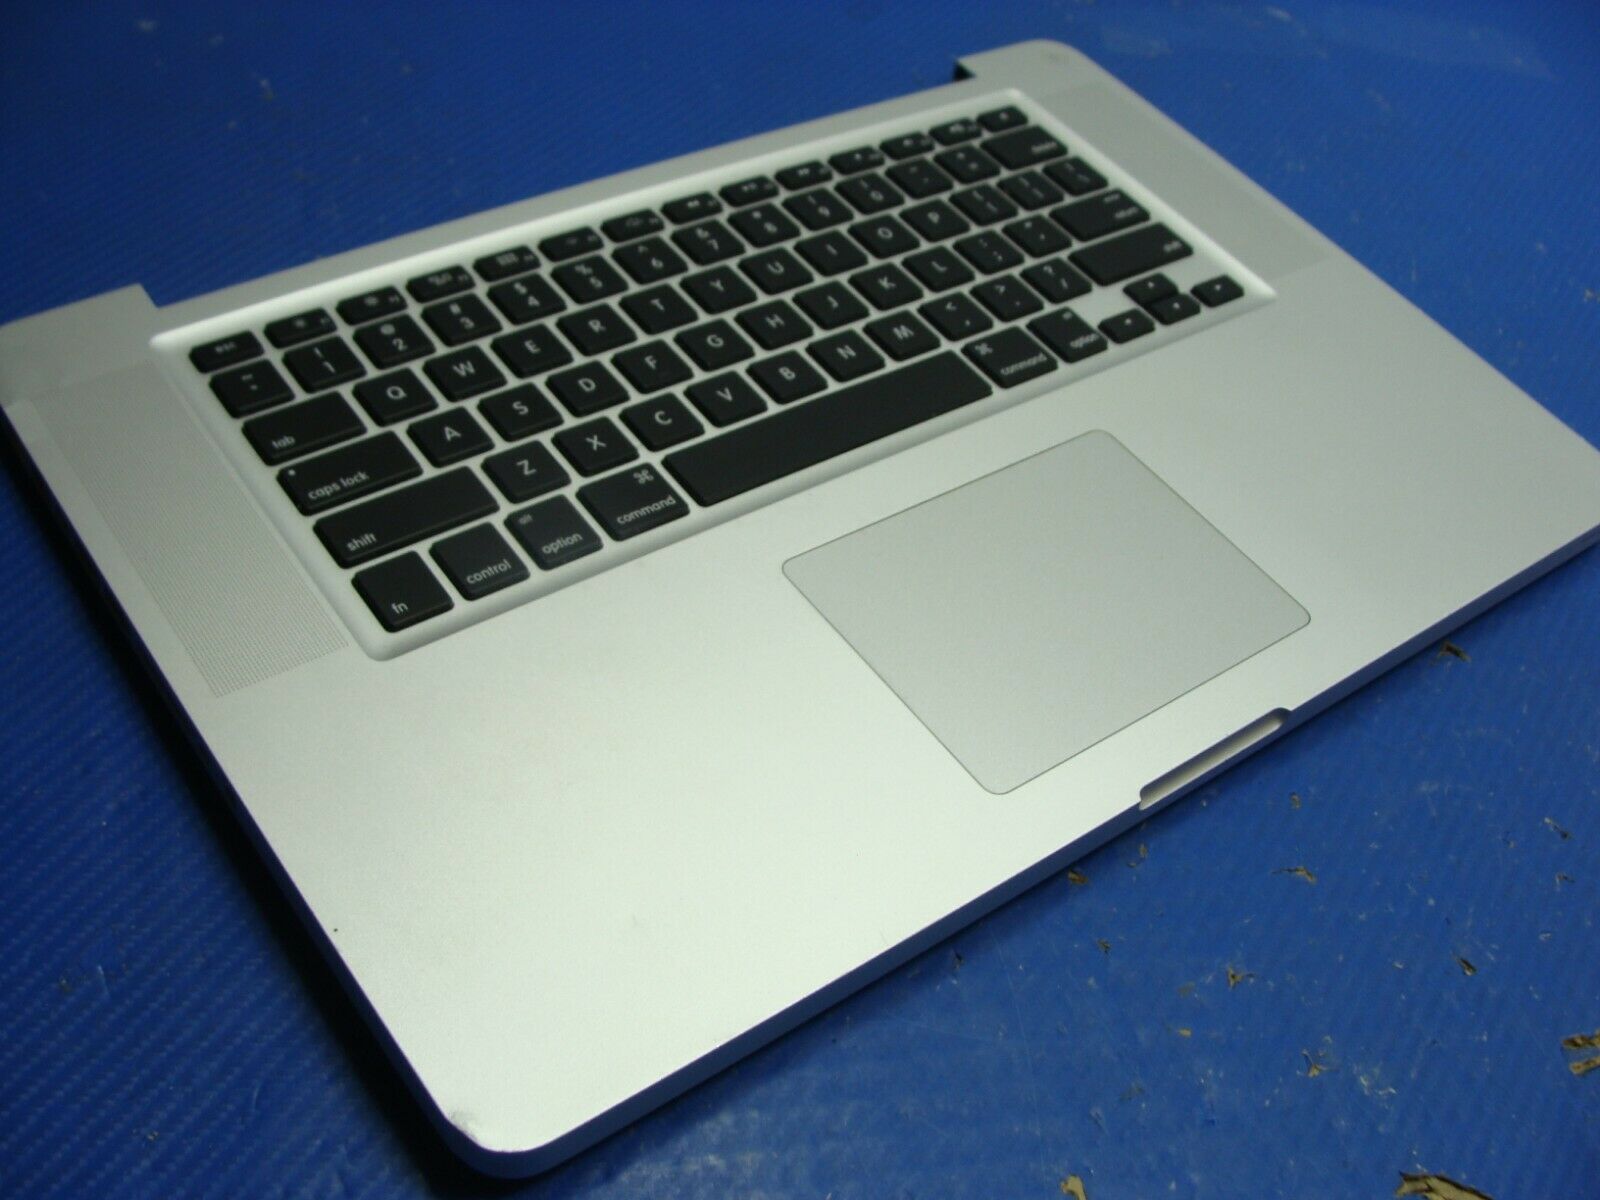 MacBook Pro A1286 MD318LL/A Late 2011 15